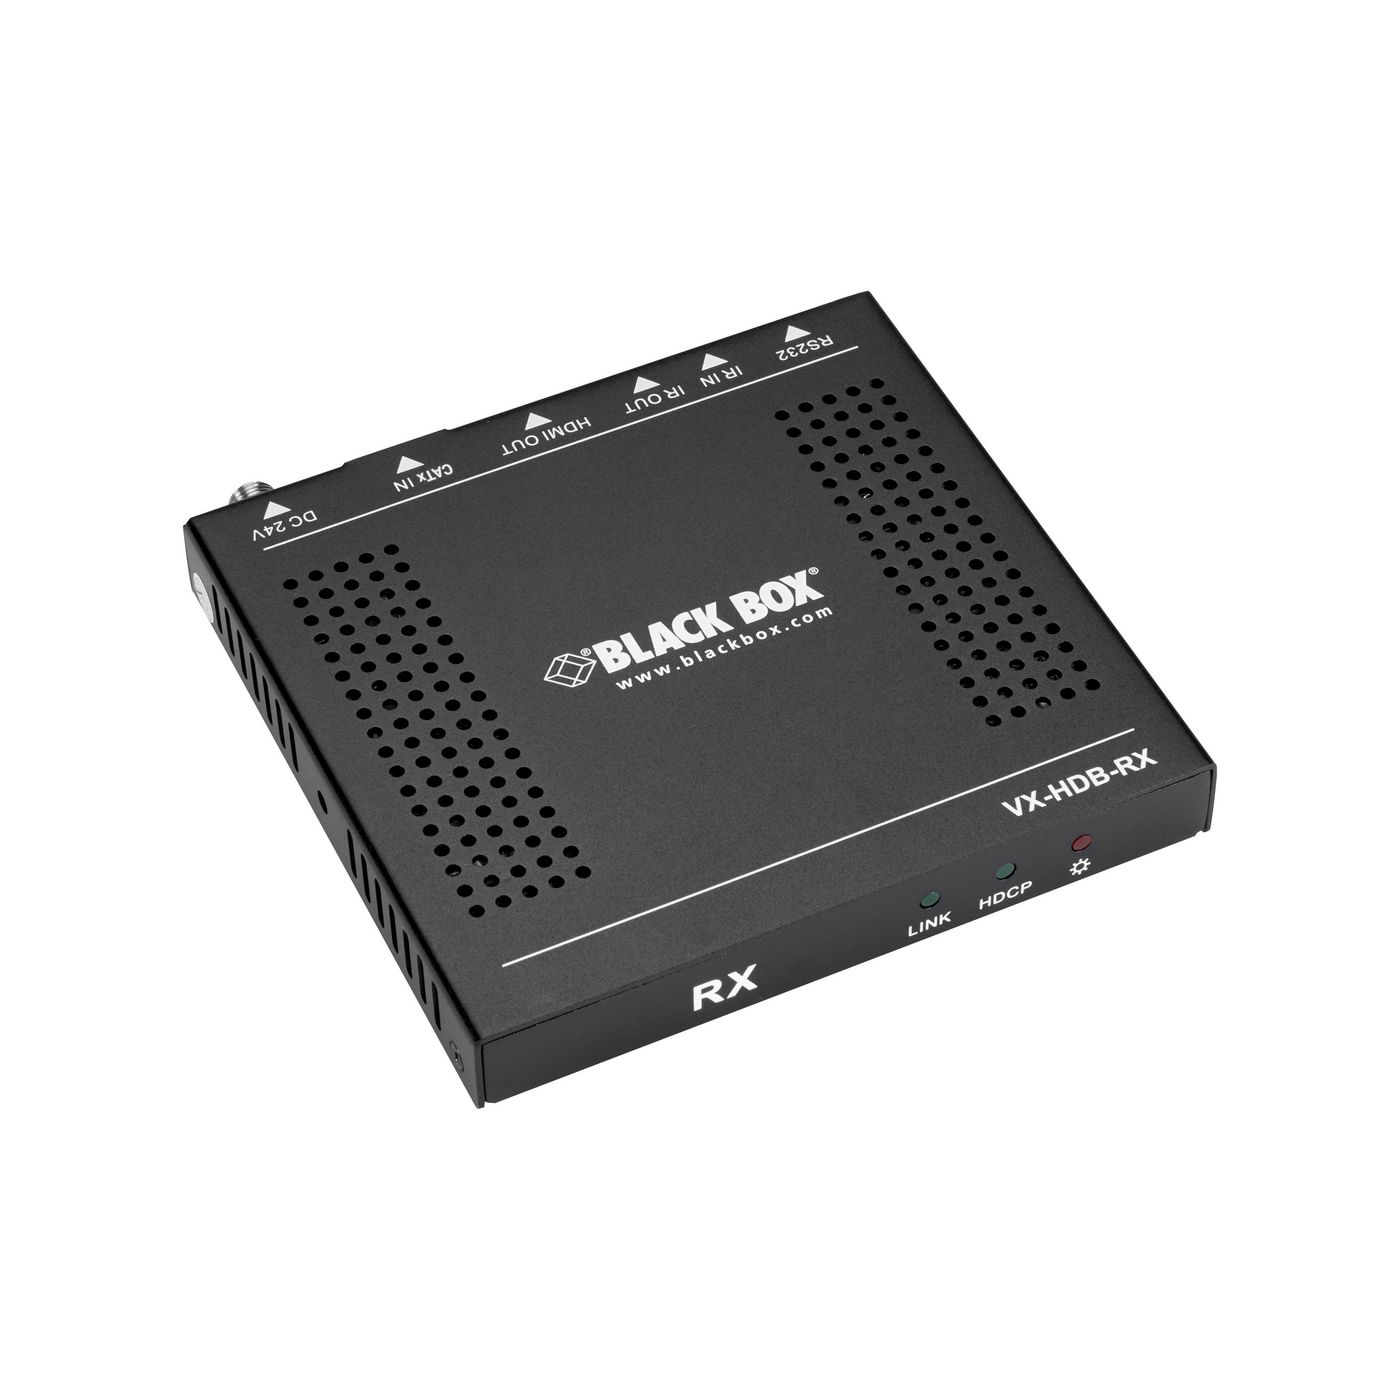 Black-Box VX-HDB-RX W126135713 4K HDMI Video Extender 